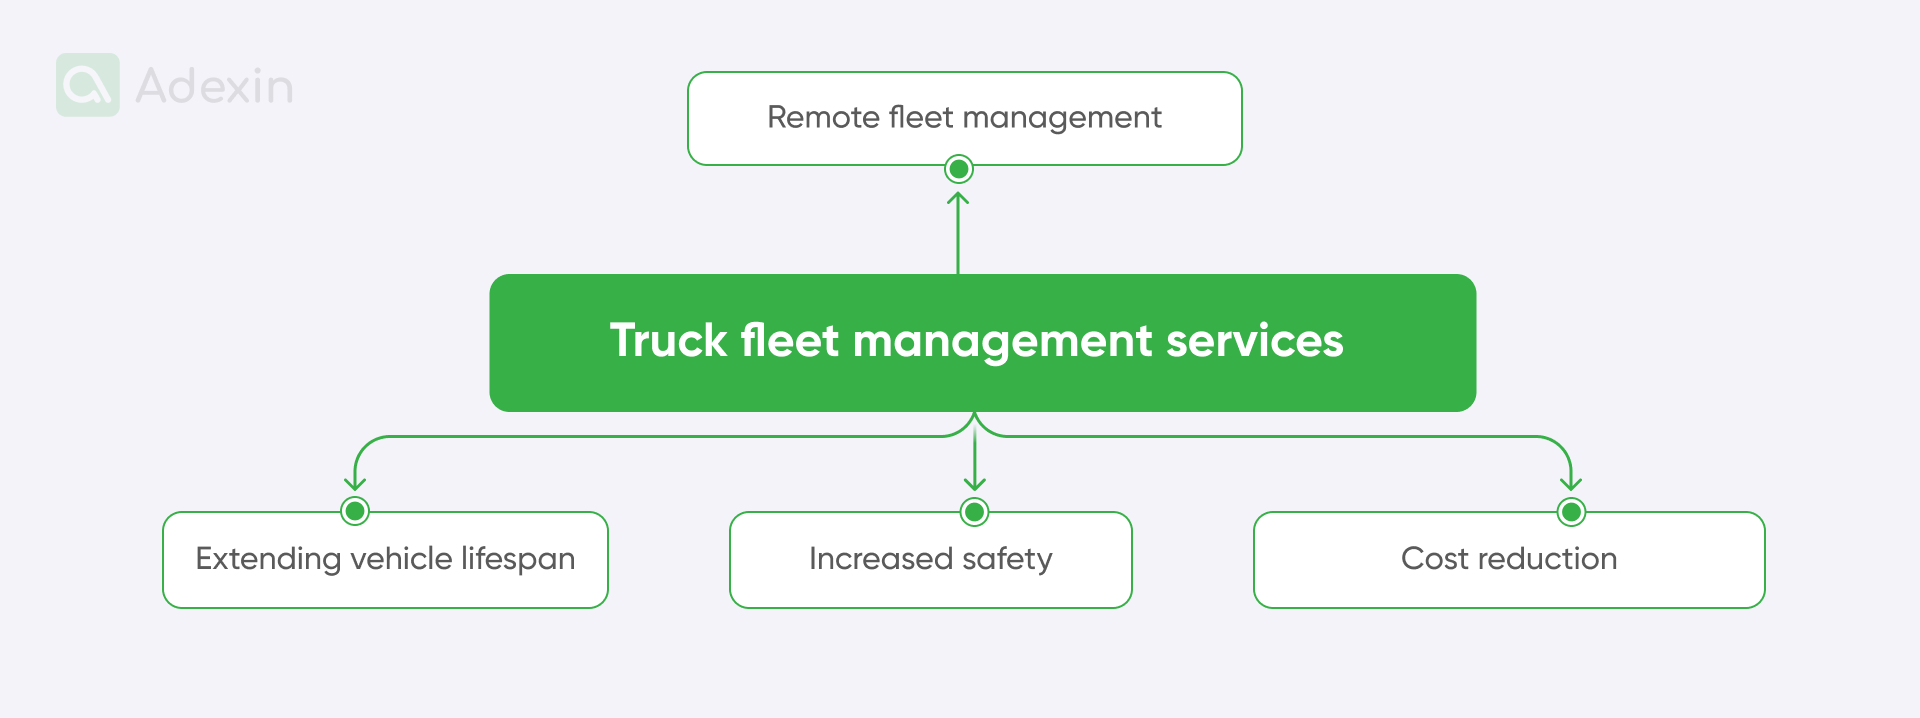 Advantages of custom software for fleet management